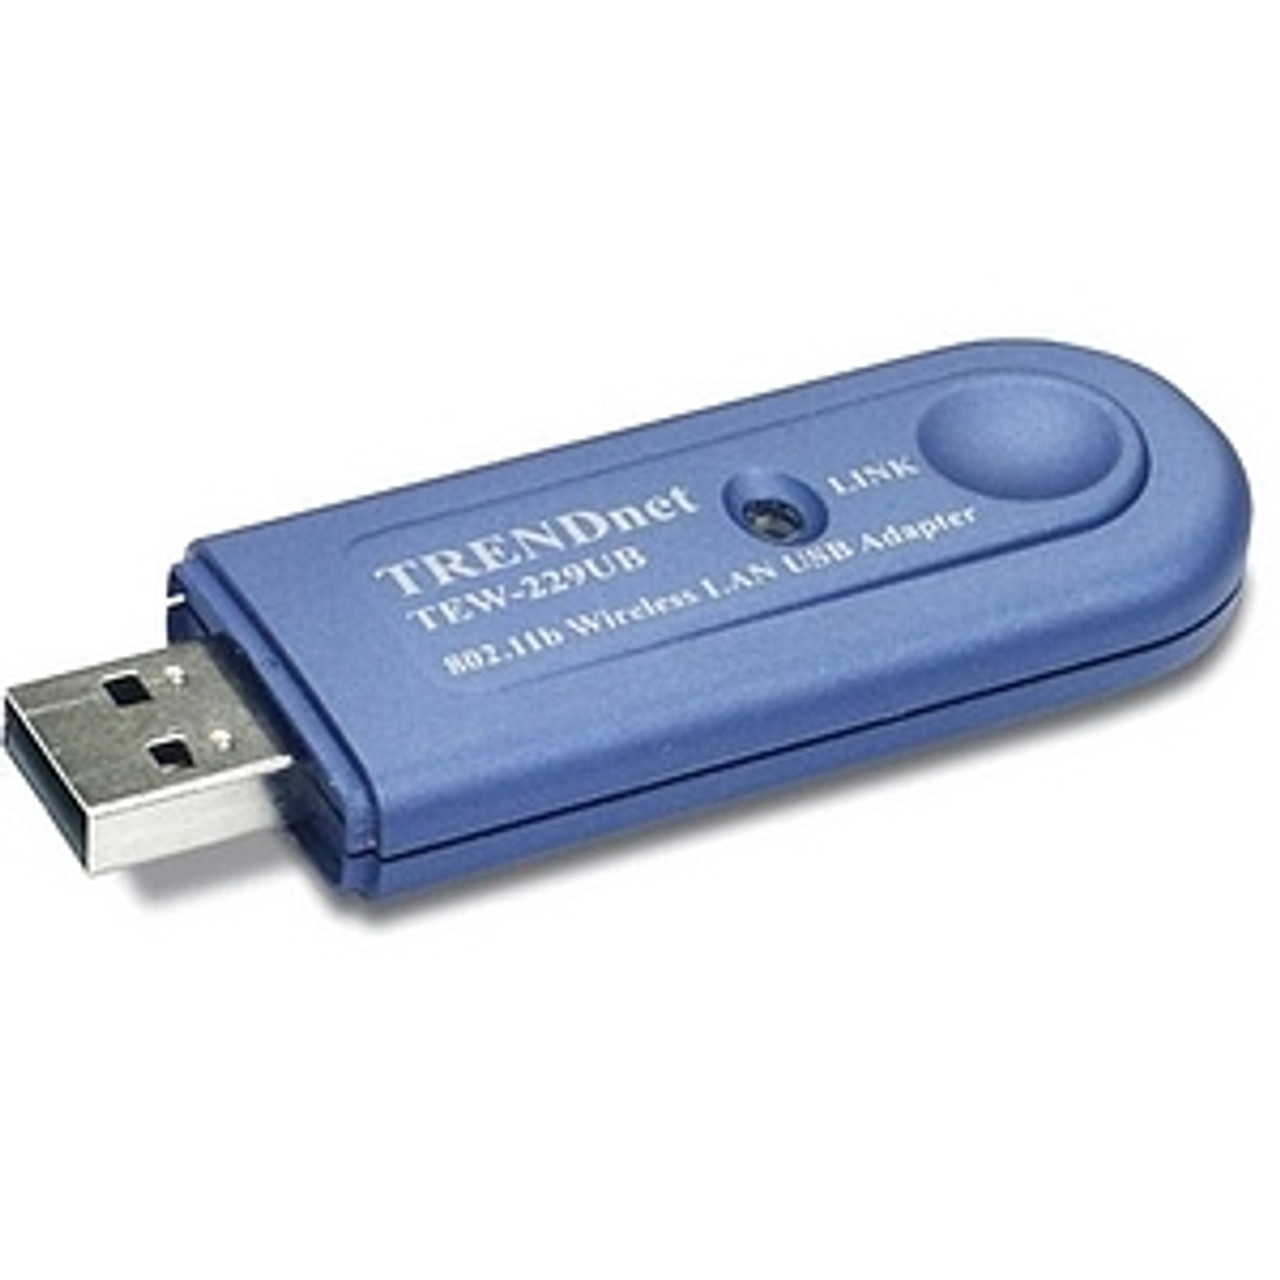 TEW-229UB TRENDnet 11Mbps Wireless USB Network Adapter